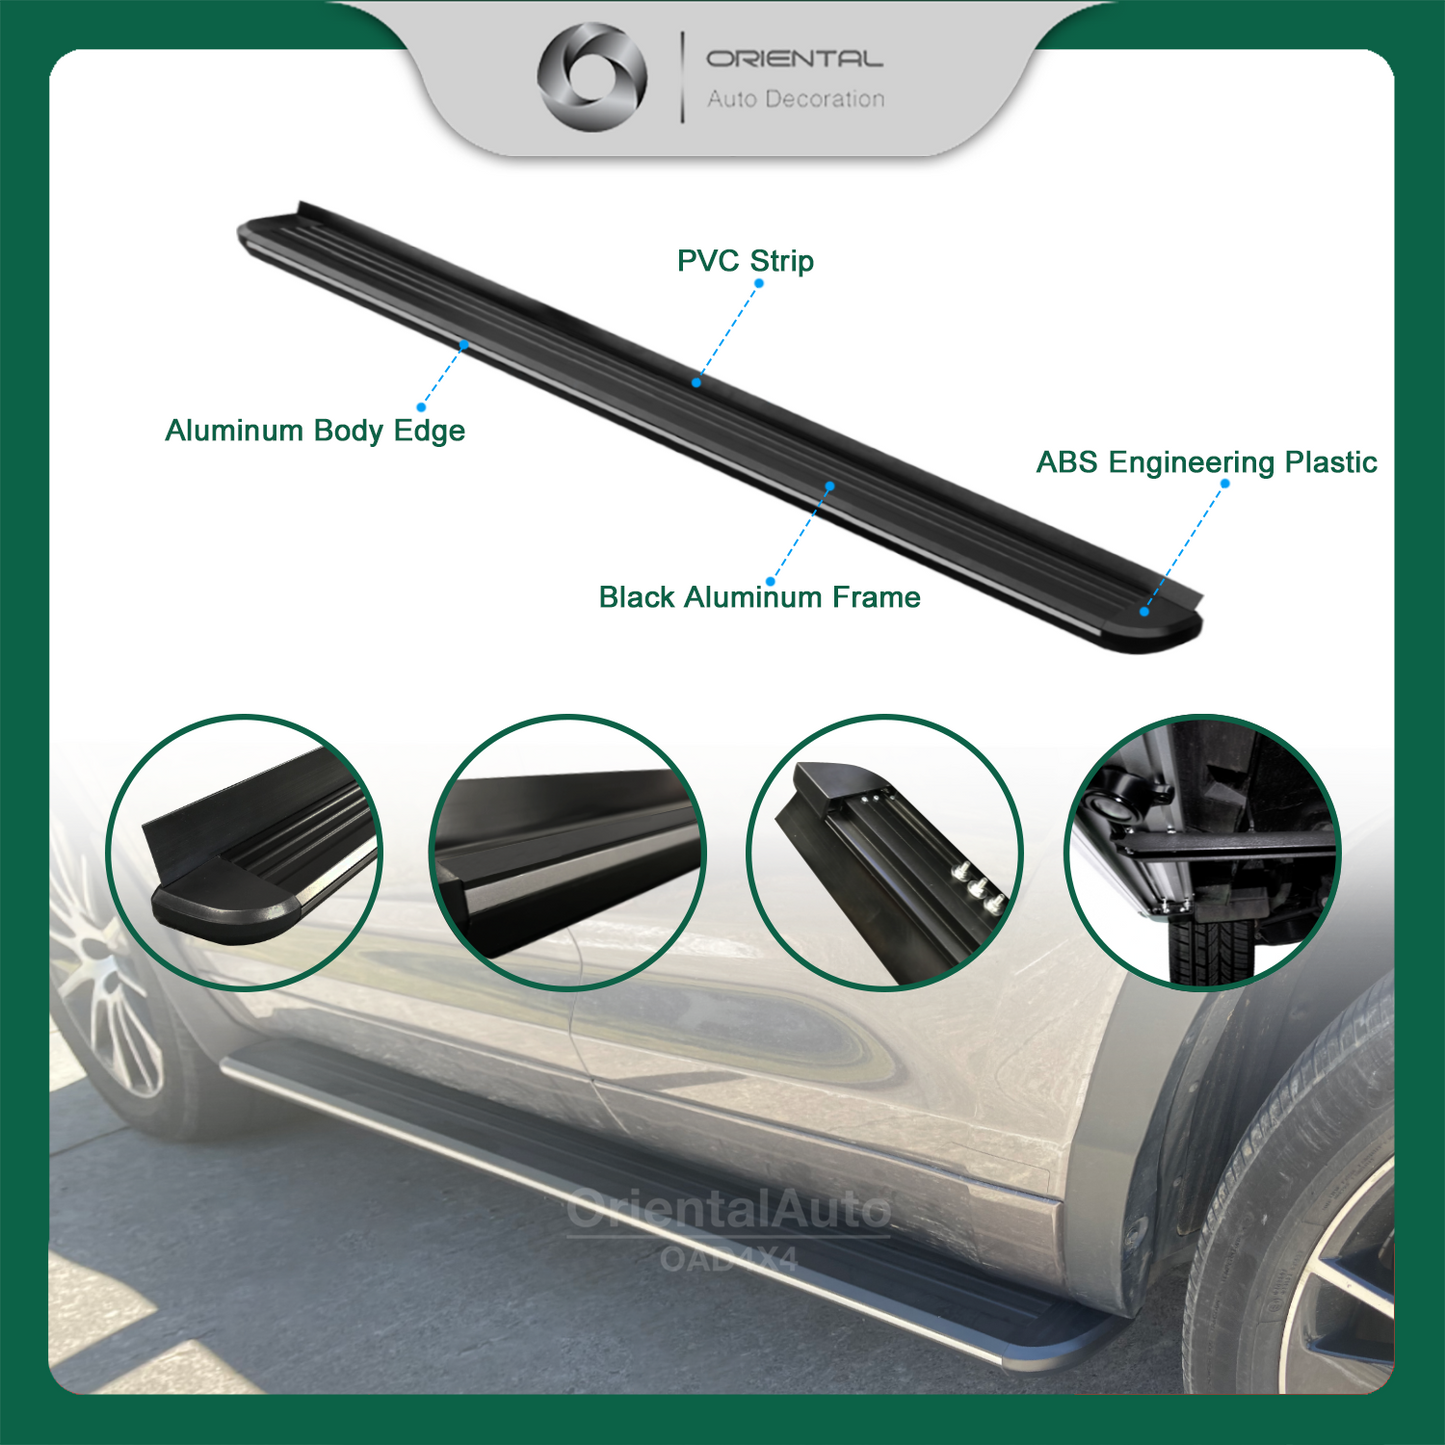 Black Aluminum Side Steps Running Board For Fiat Freemont JF 2013-2018 #LP